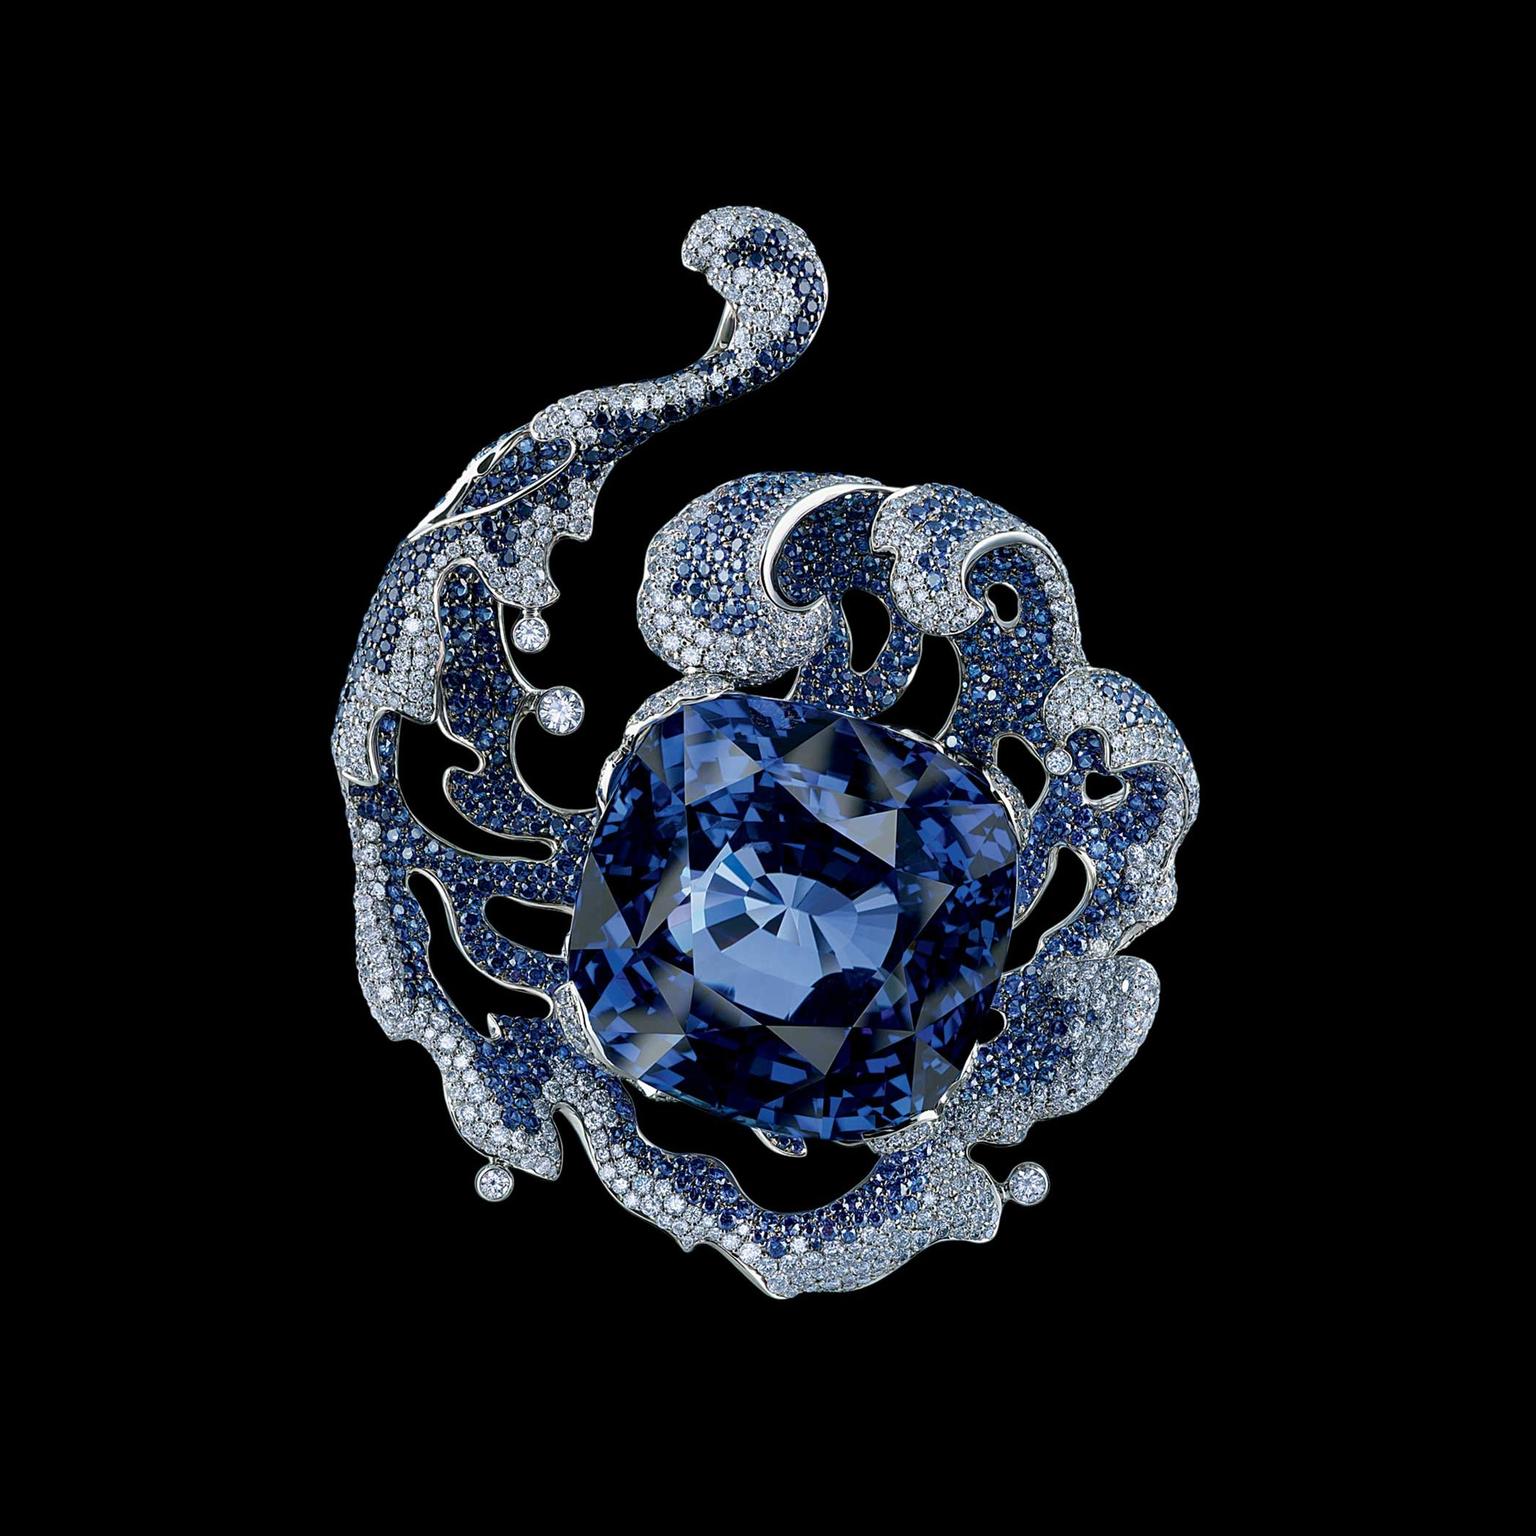 Maxim V Elements pendant with 100t cushion-cut sapphire